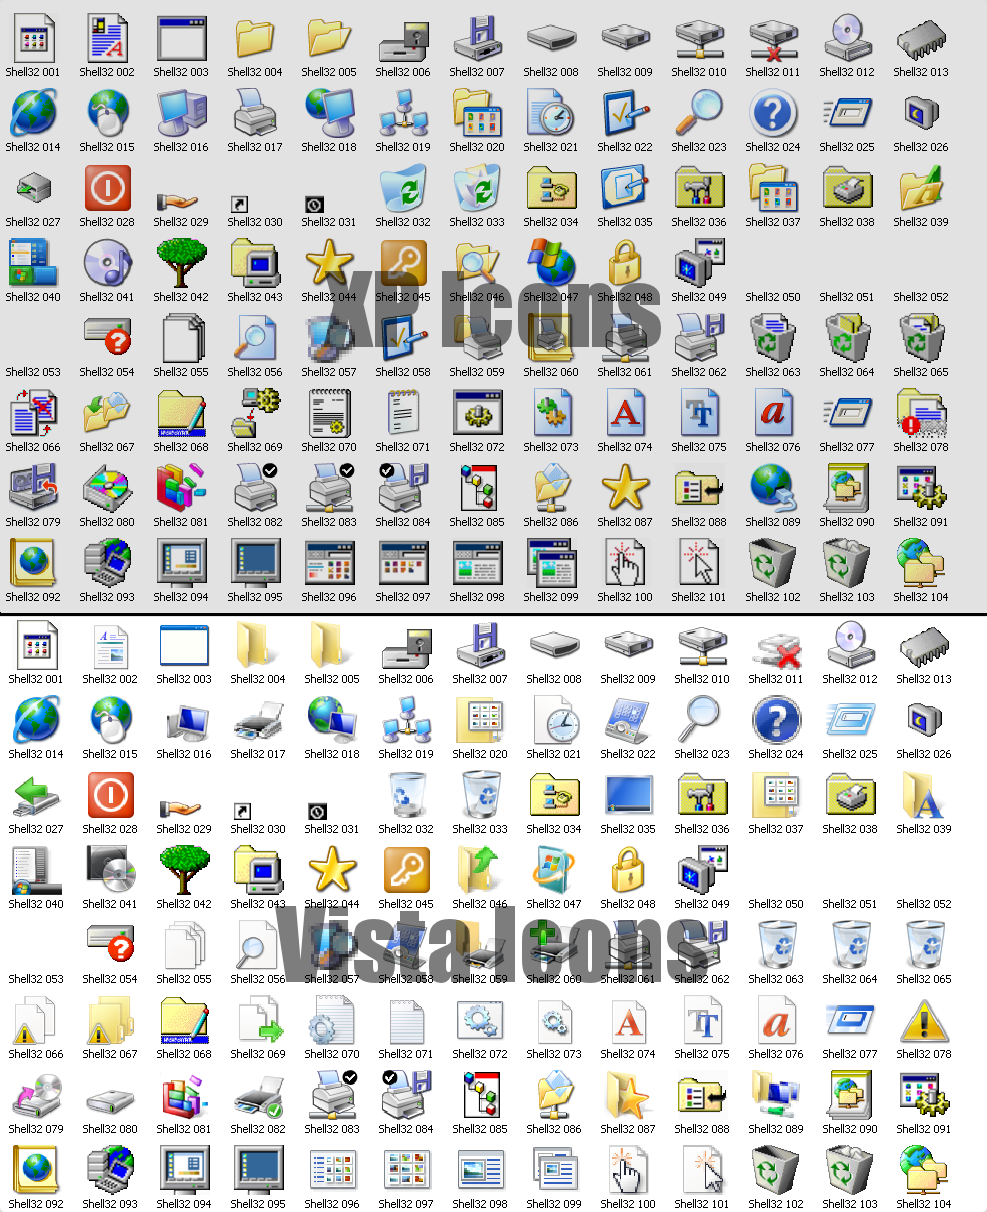 Windows XP and Vista Icons